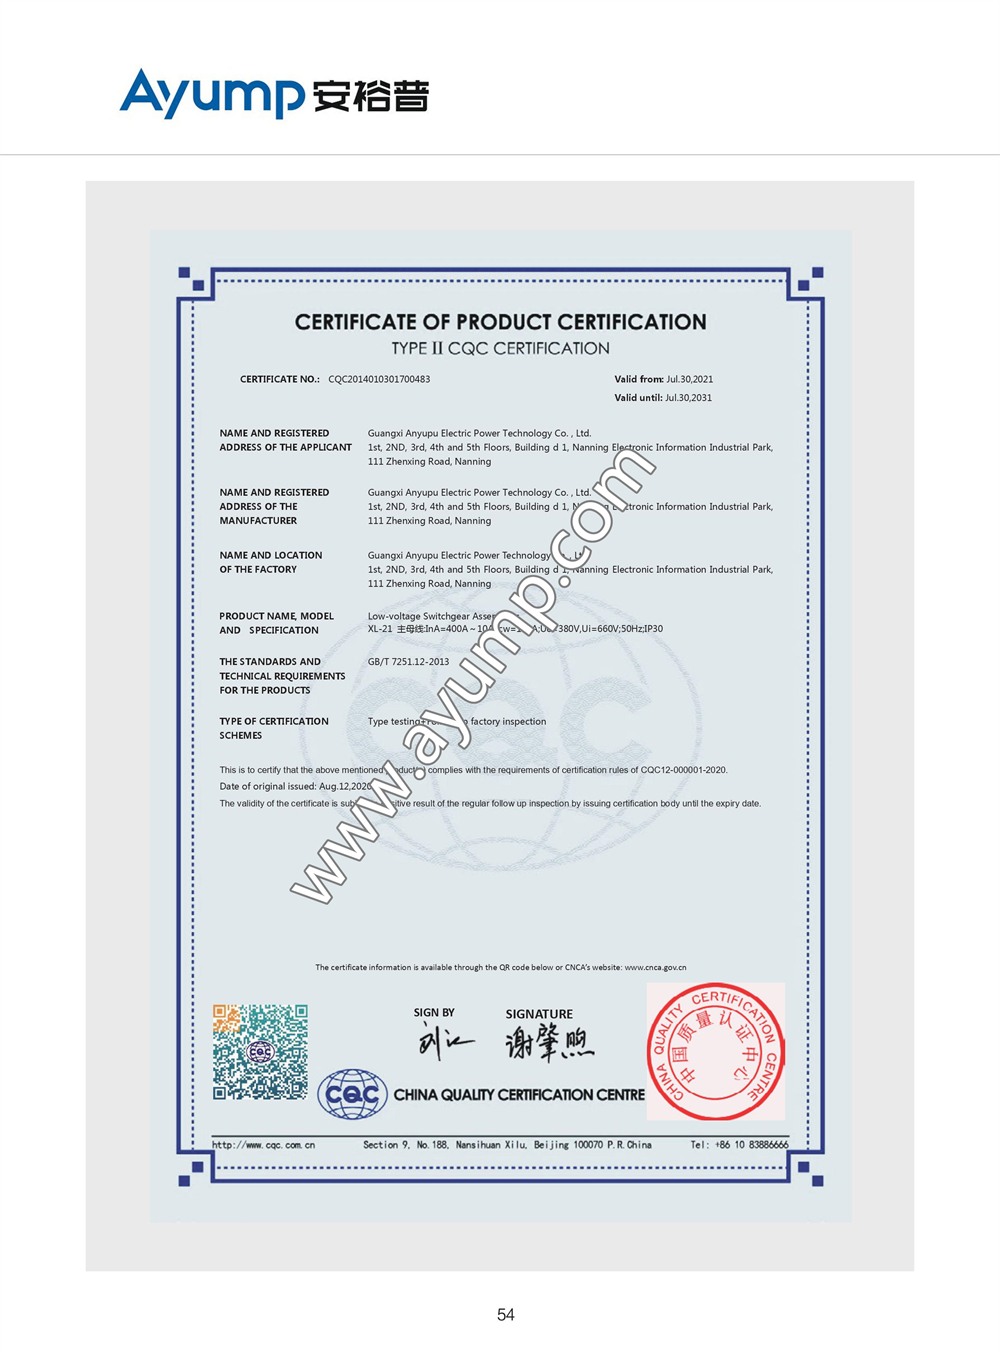 XL-21动力箱国家强制性产品认证证书Ⅱ型自愿认证